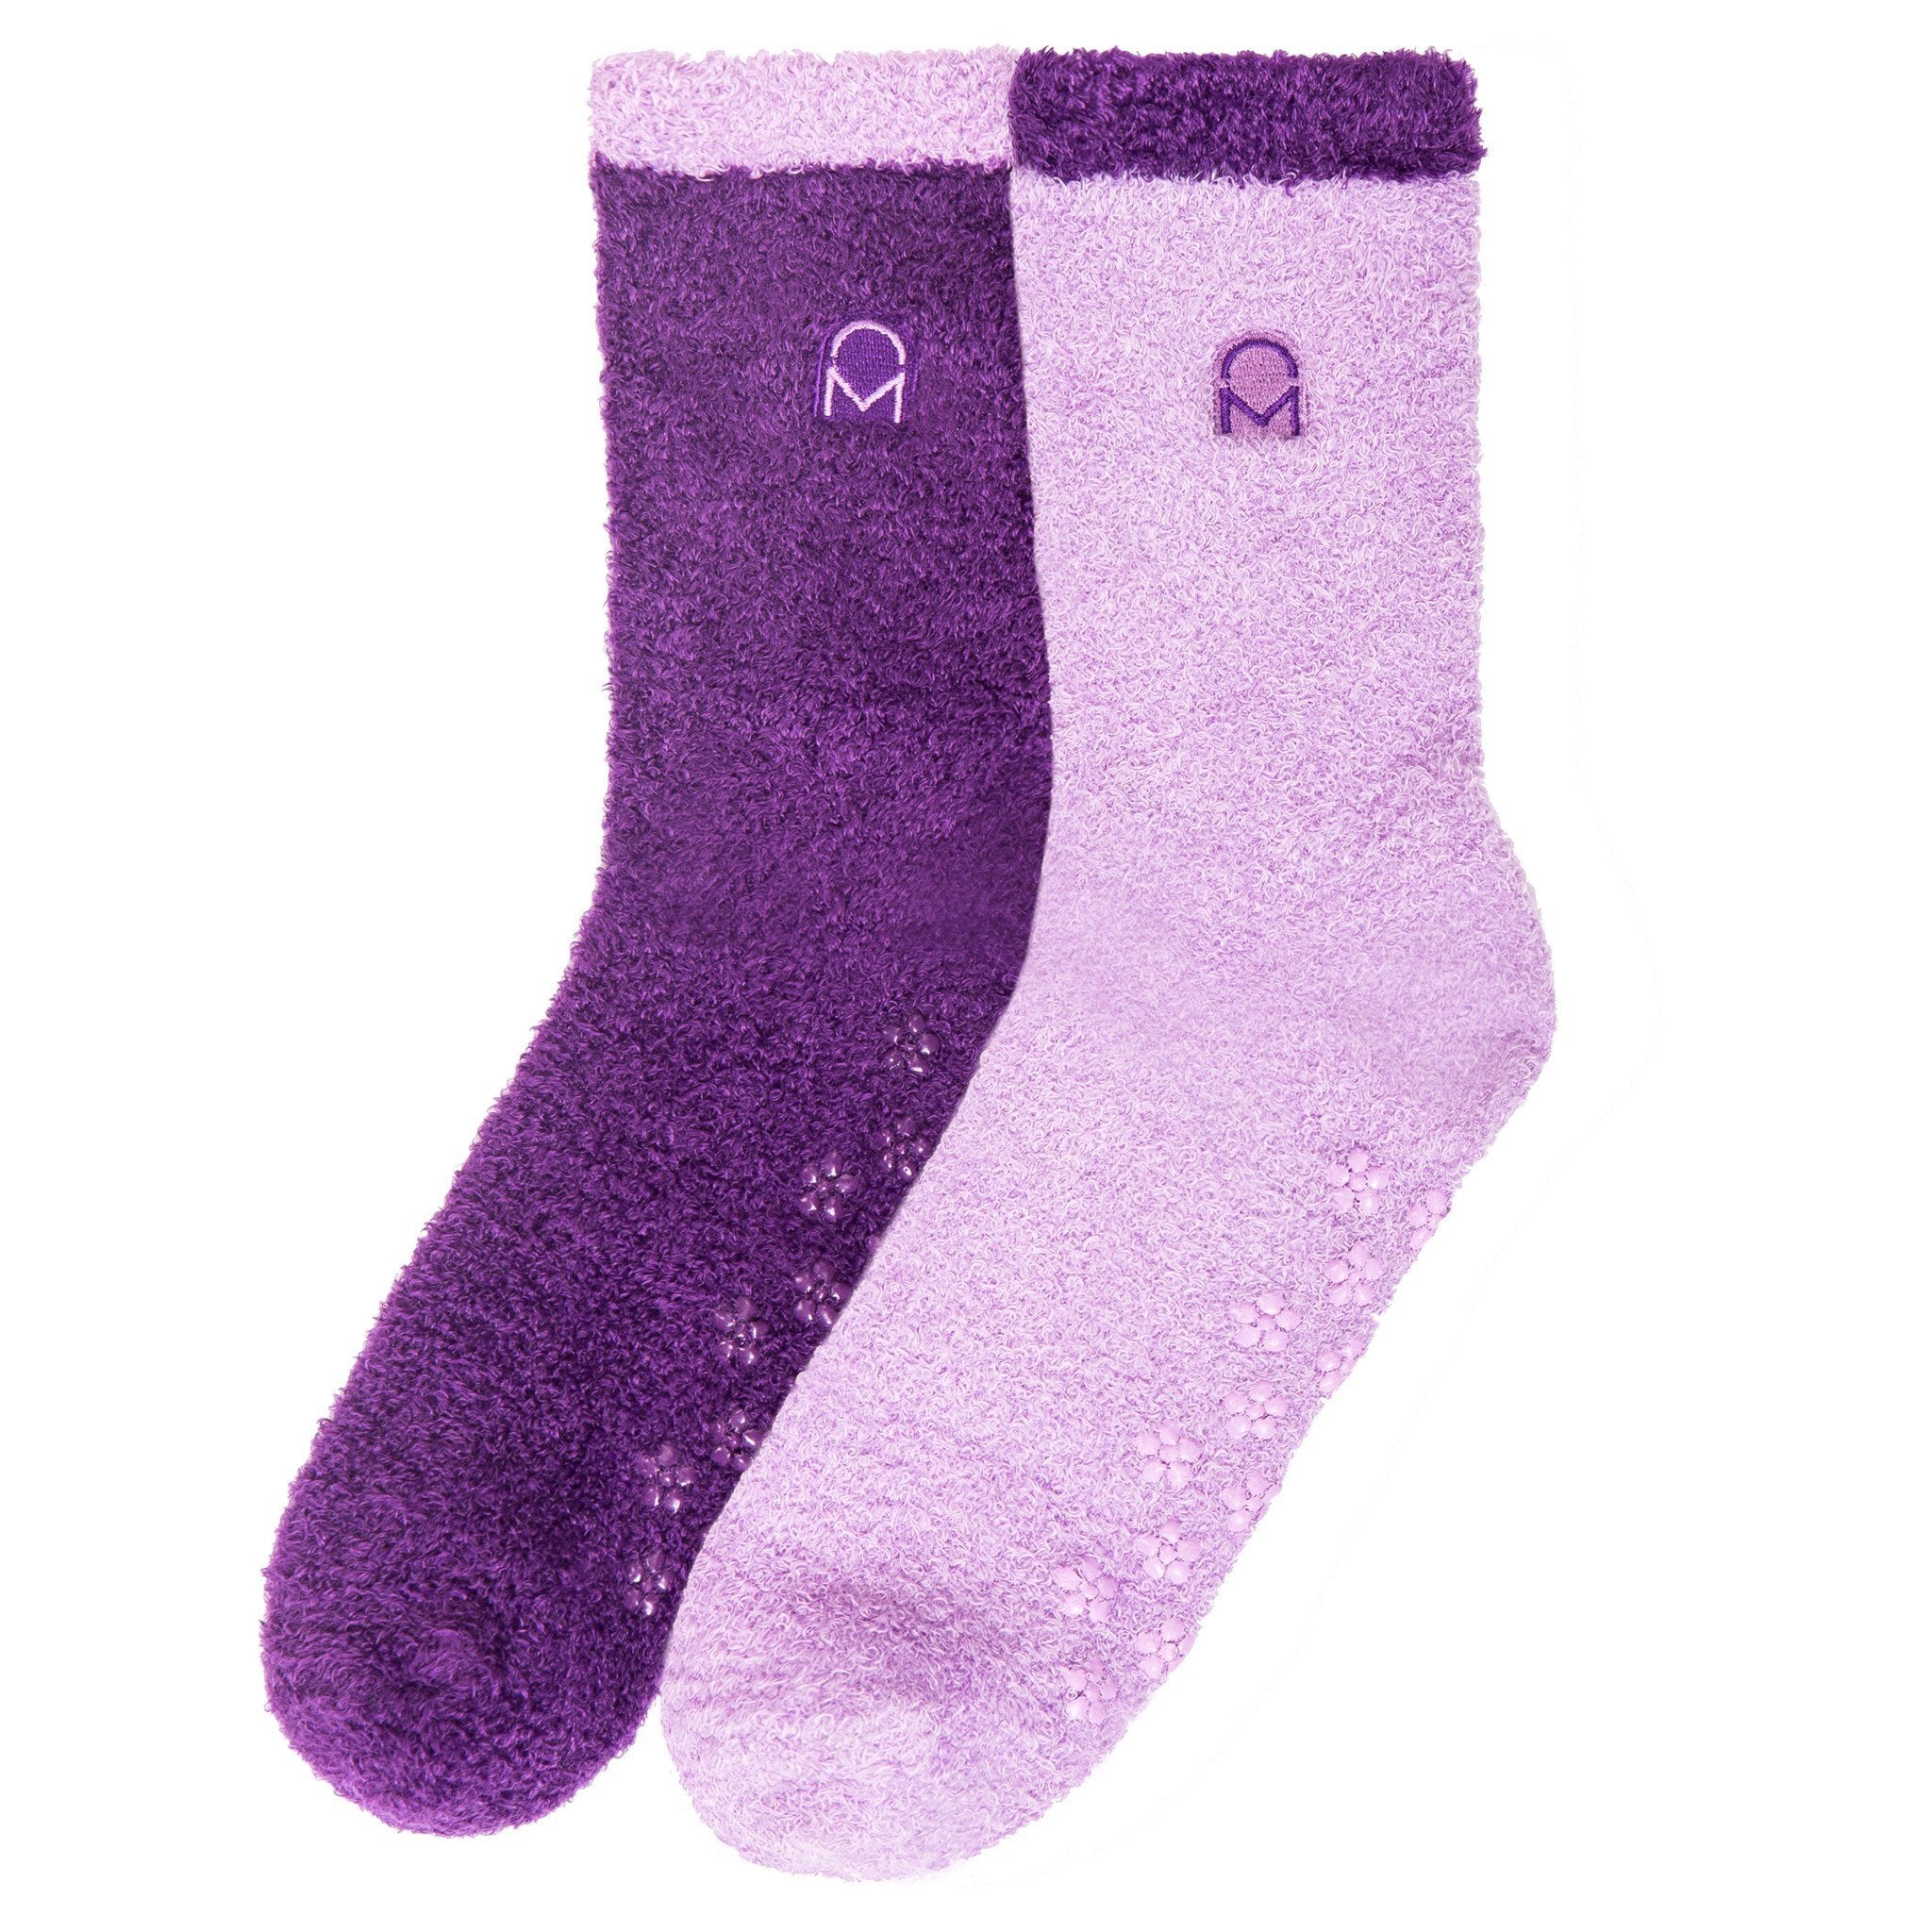 Box Packaged Women's Soft Anti-Skid Winter Feather Socks - 2-Pairs - Set C1